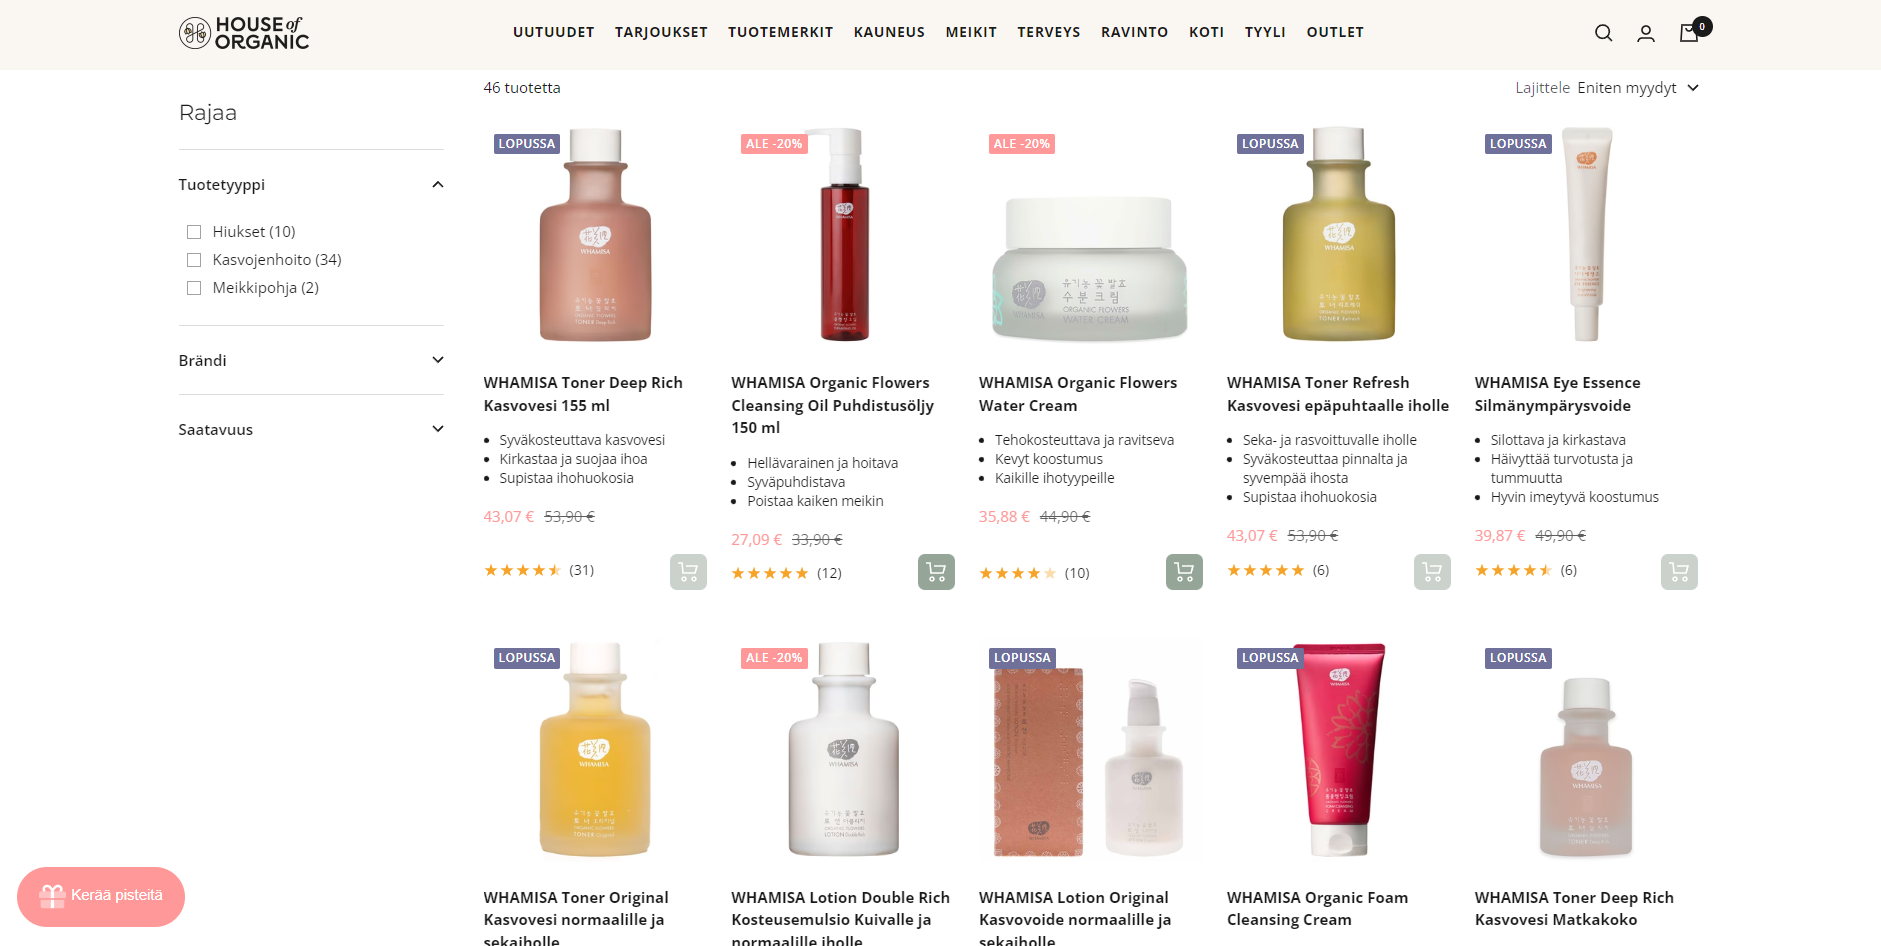 houseoforganicfi selling South Korean organic skin care brand Whamisa